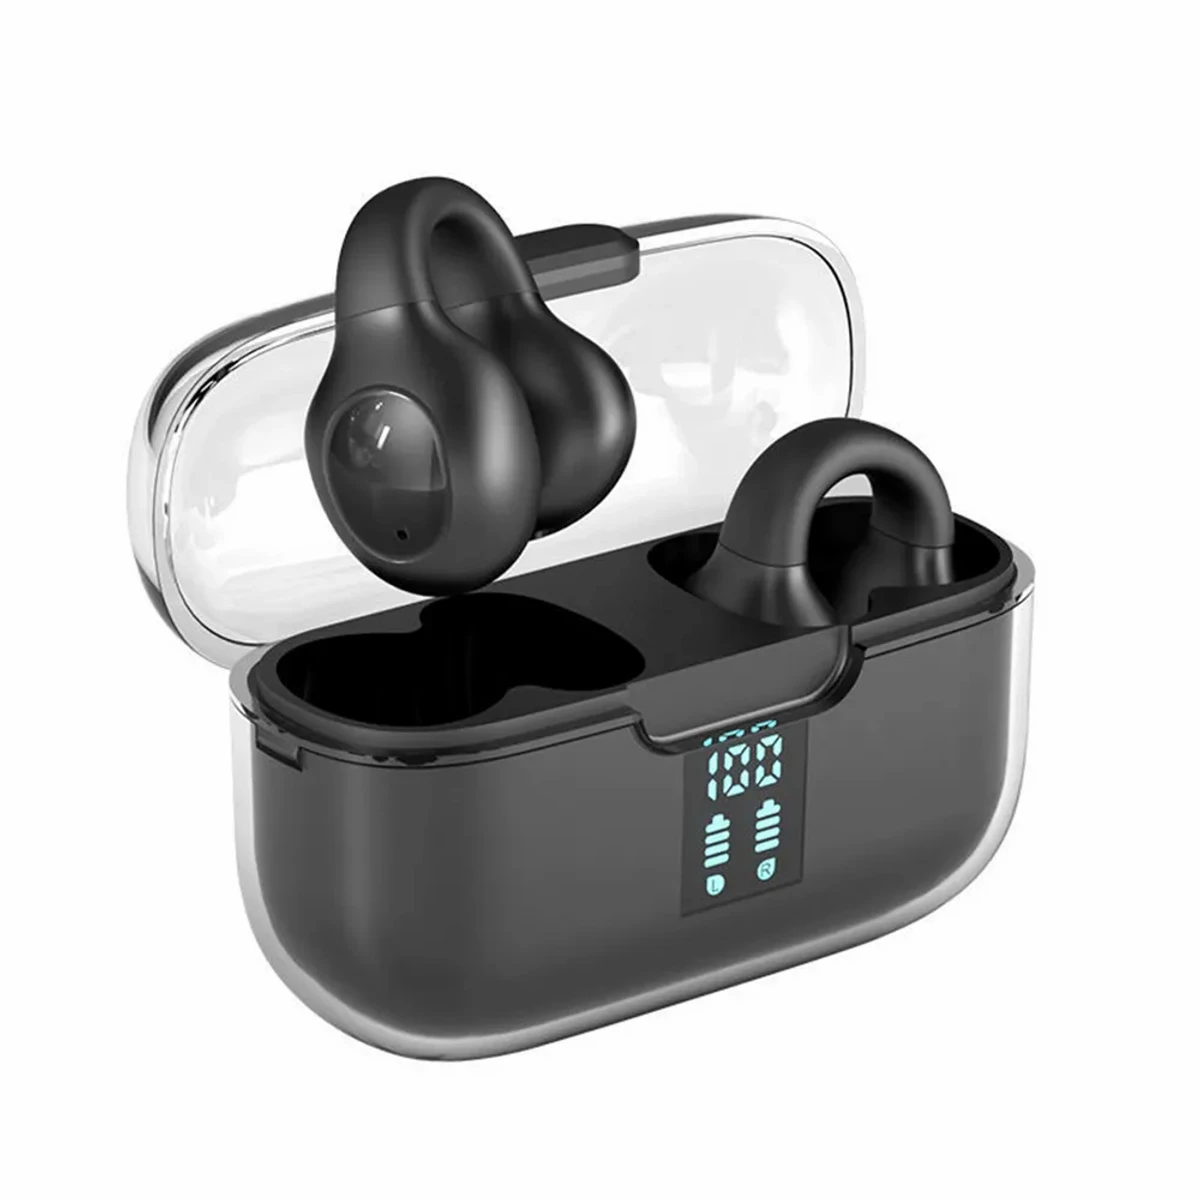 G91 Ear Clip TWS True Wireless Stereo Earbuds ( ⭐টিয়া কালার ,কালো কালার)